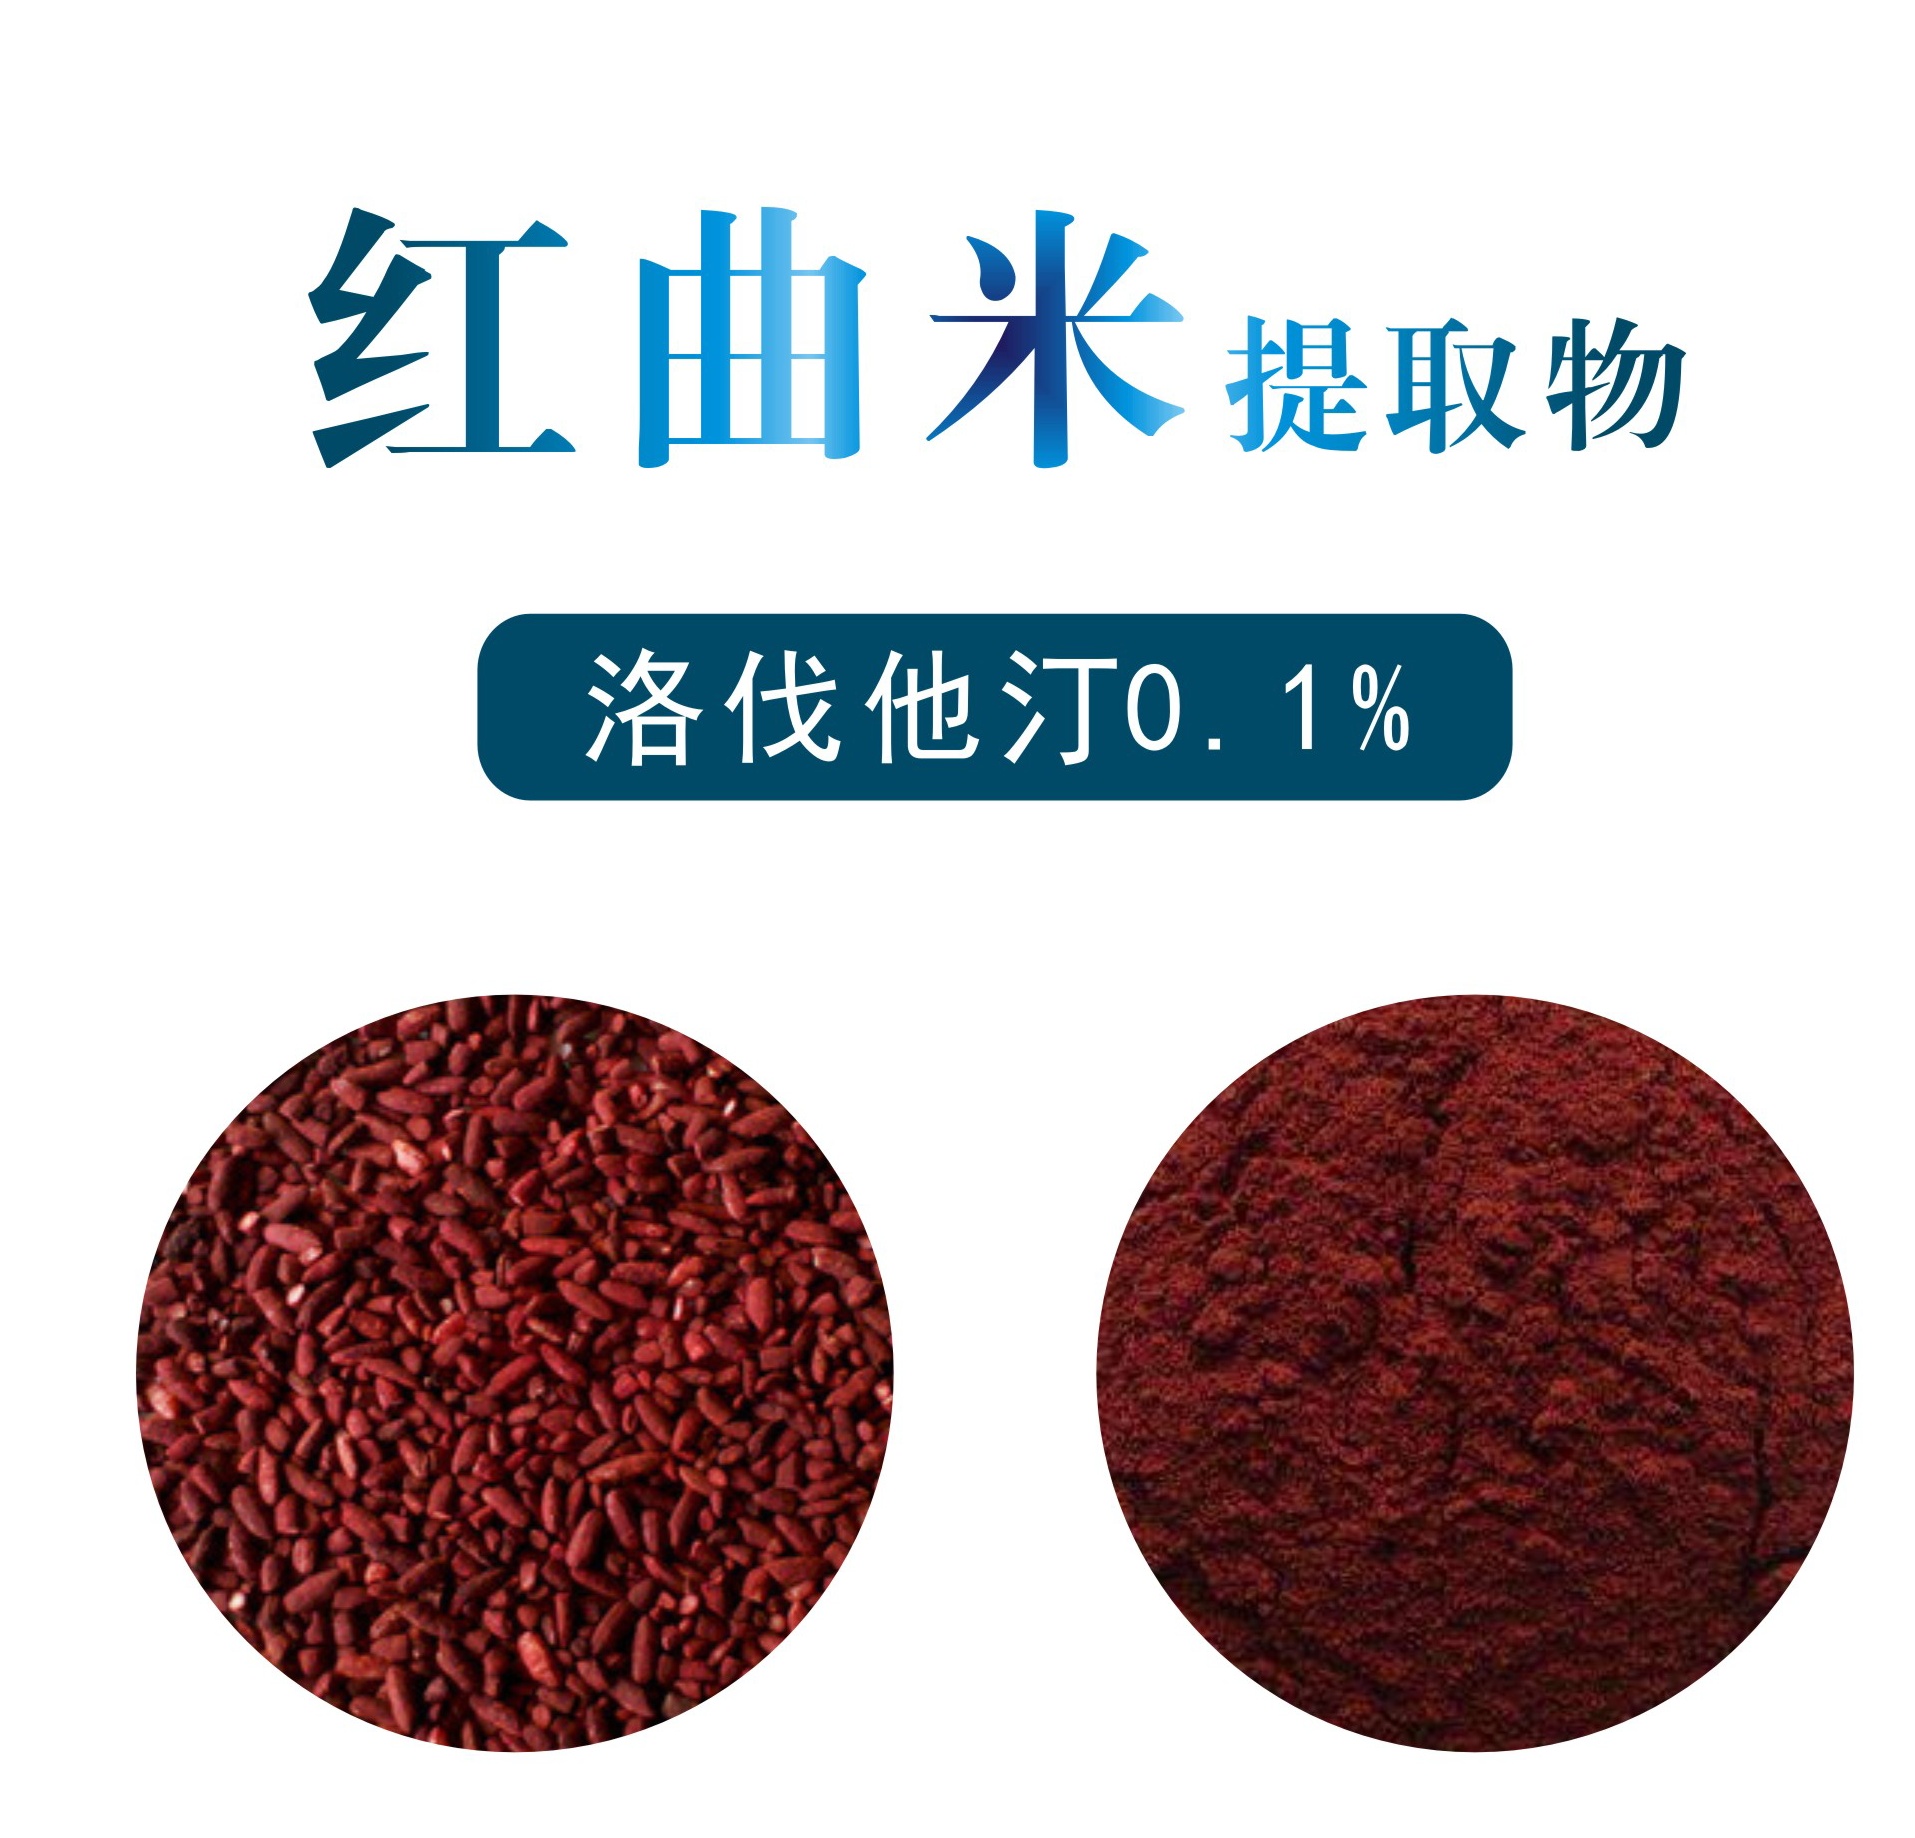 红曲米提取物,Red rice extract